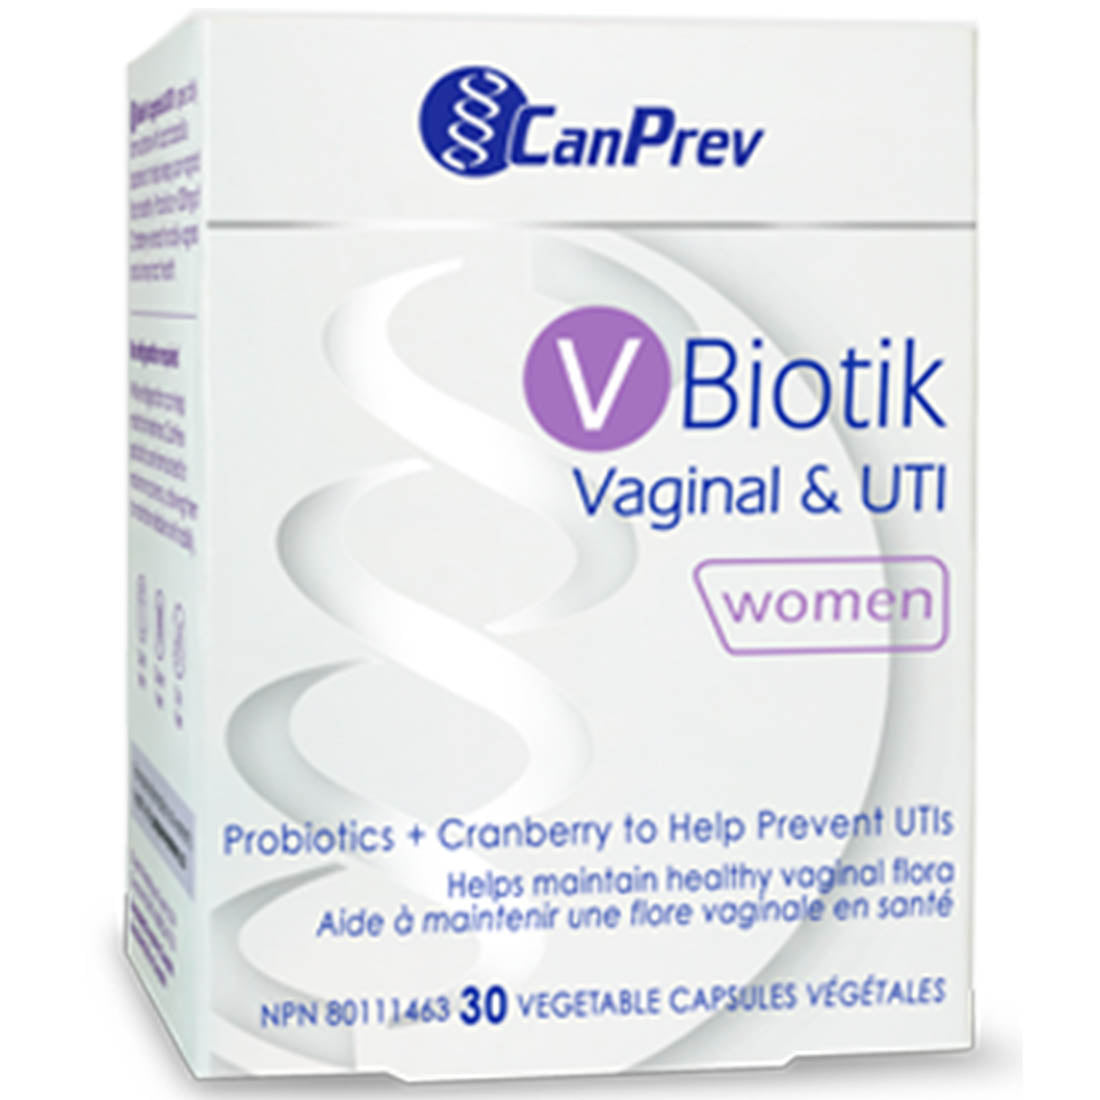 CanPrev V Biotik Vaginal Probiotic & UTI Support, 30 Vegetable Capsules